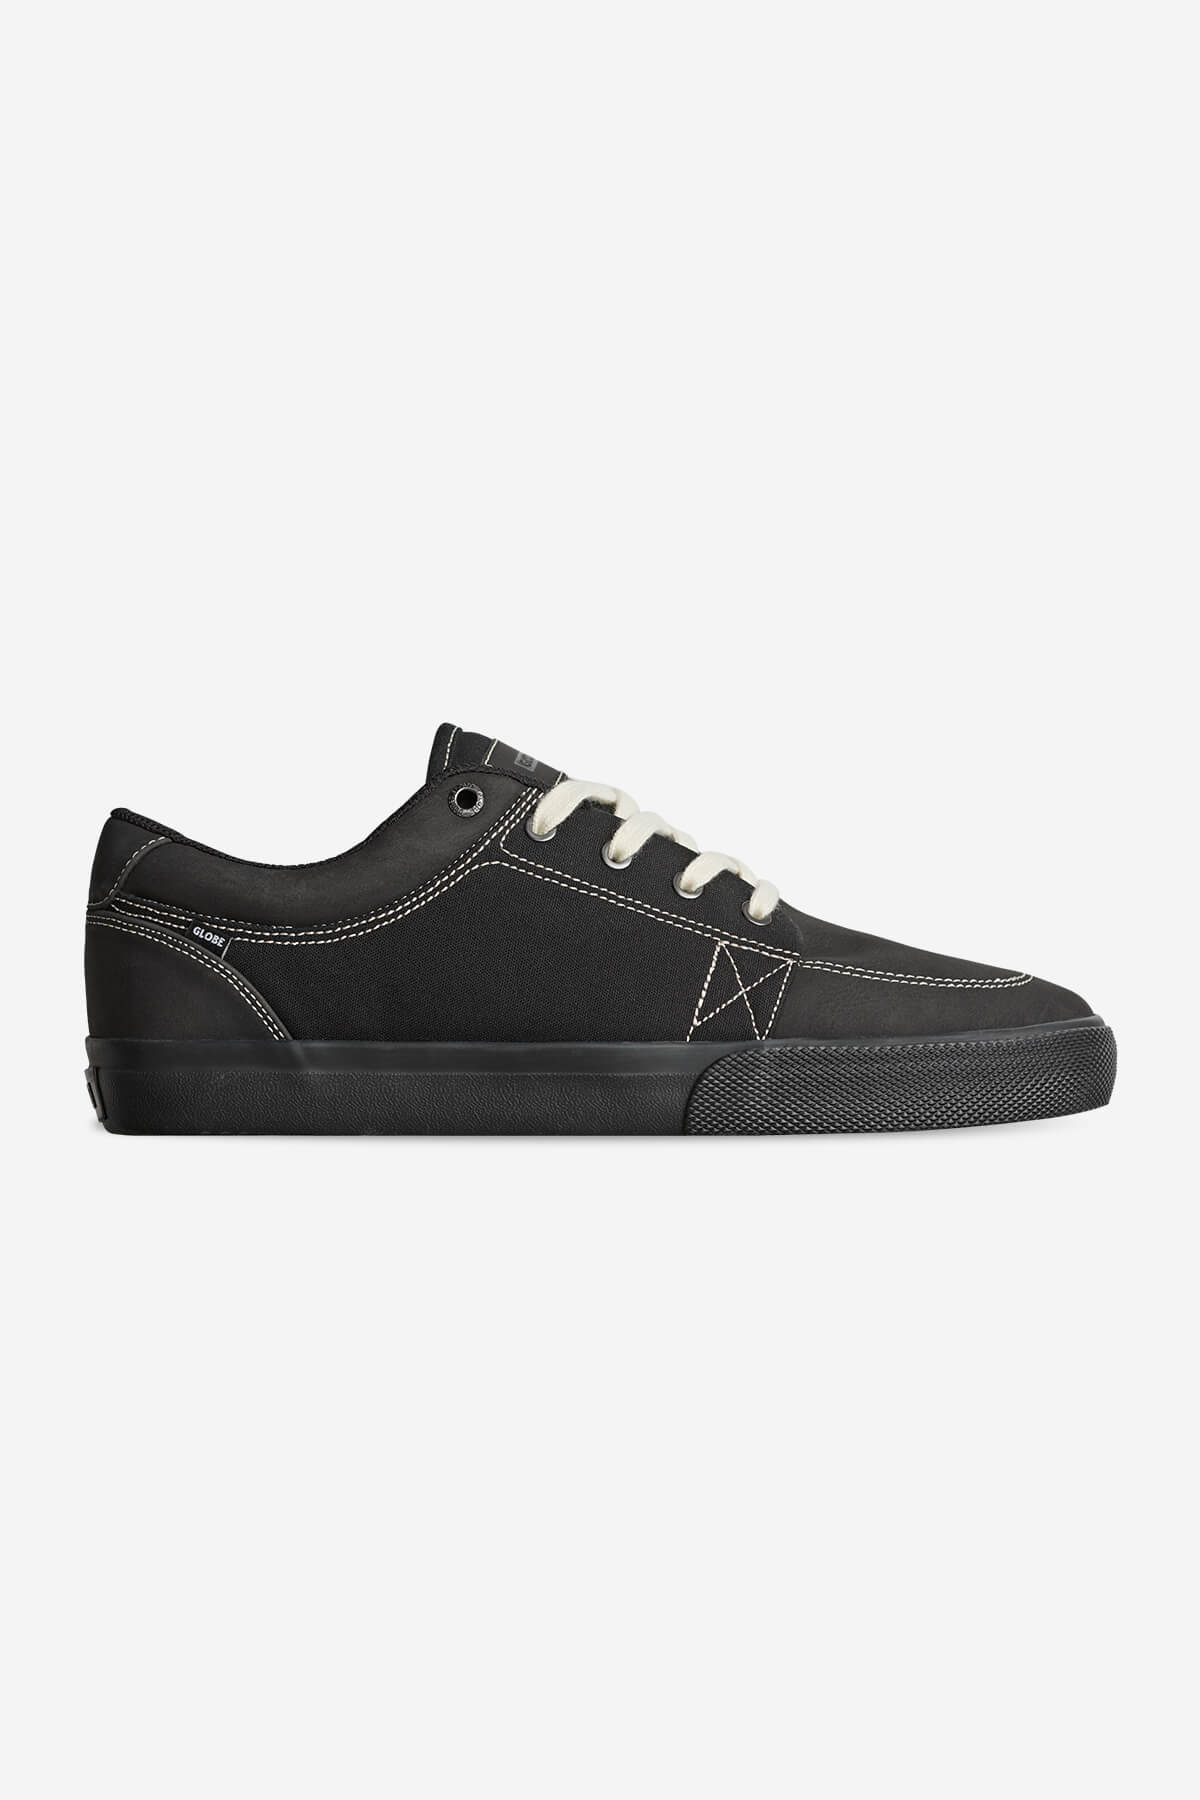 gs noir antique white skateboard  chaussures